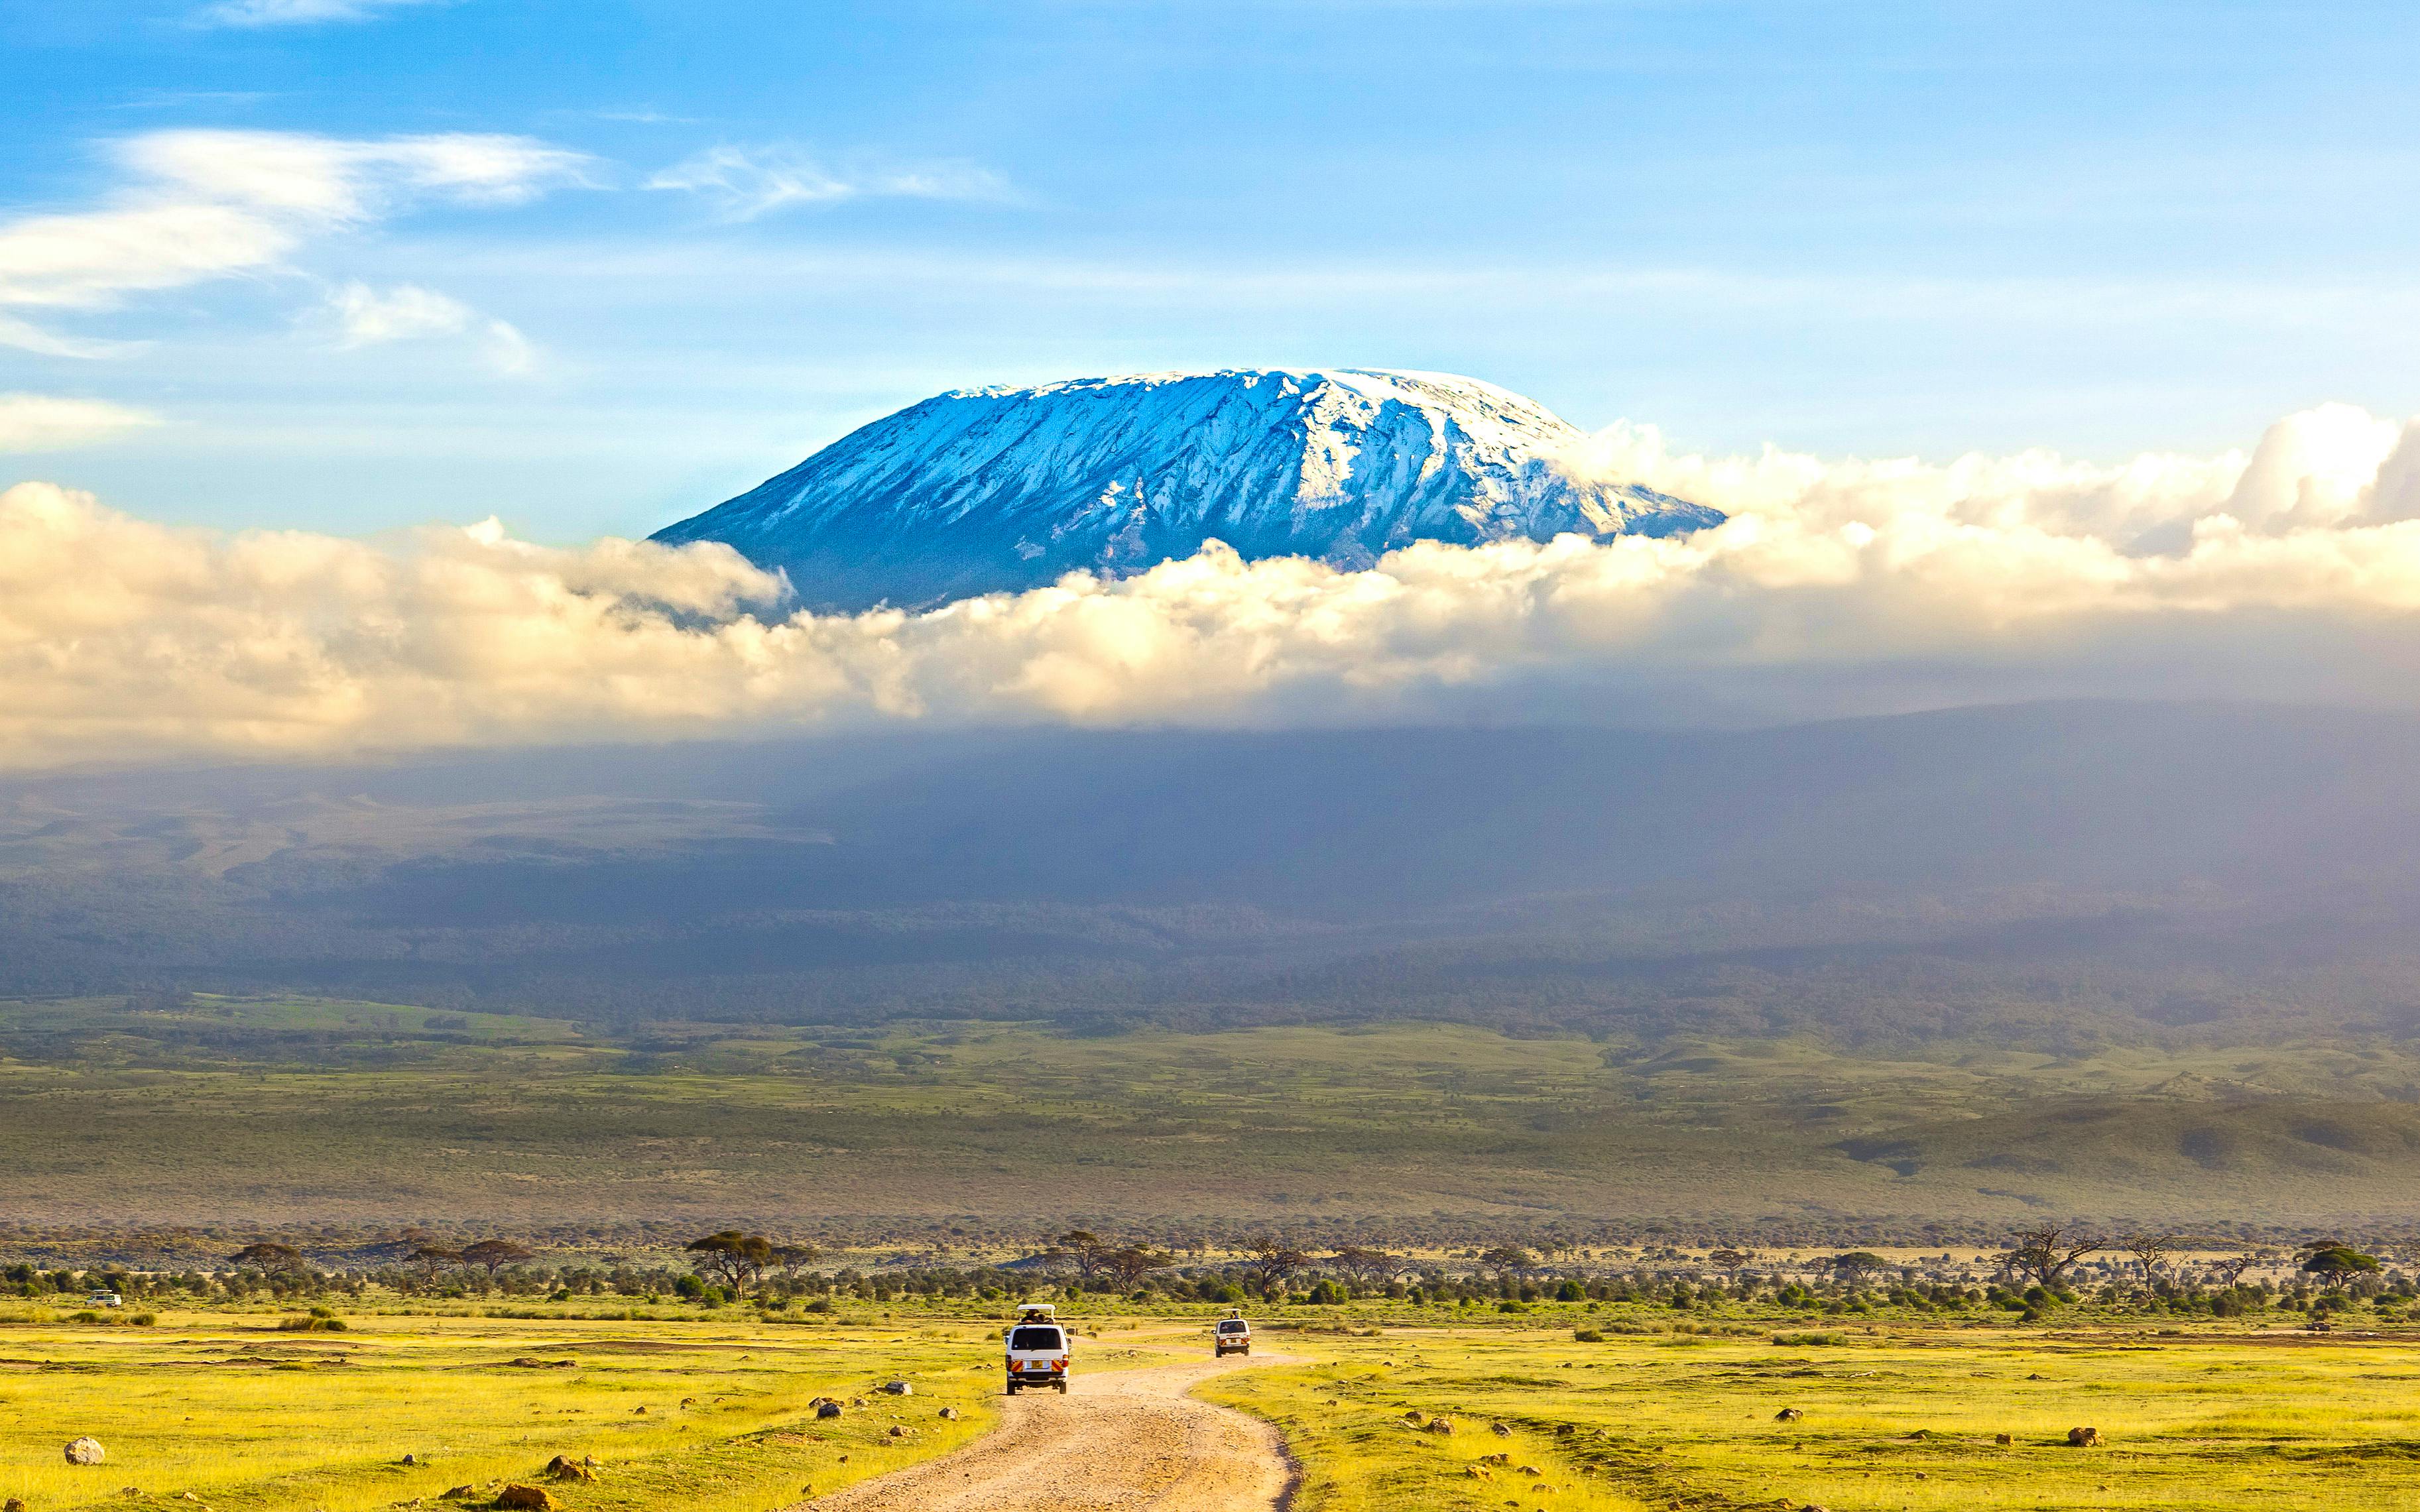 Kilimanjaro - Machame Route (5,895m)